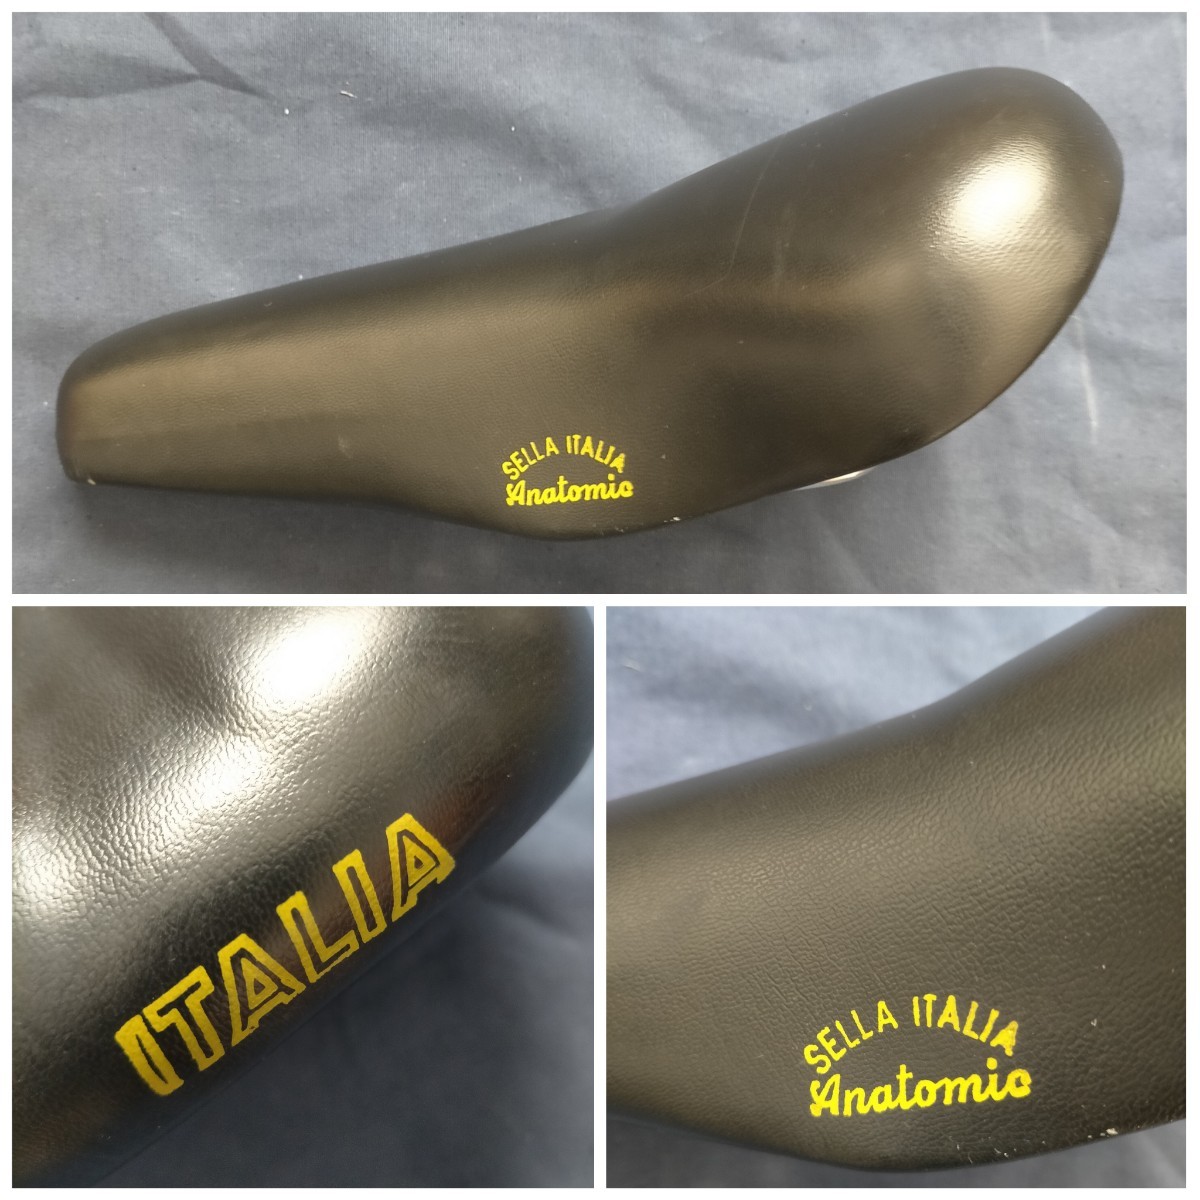 [80s* Vintage ]SELLA ITALIA Selle Italia ANATOMIC saddle Italy made MADE IN ITALY